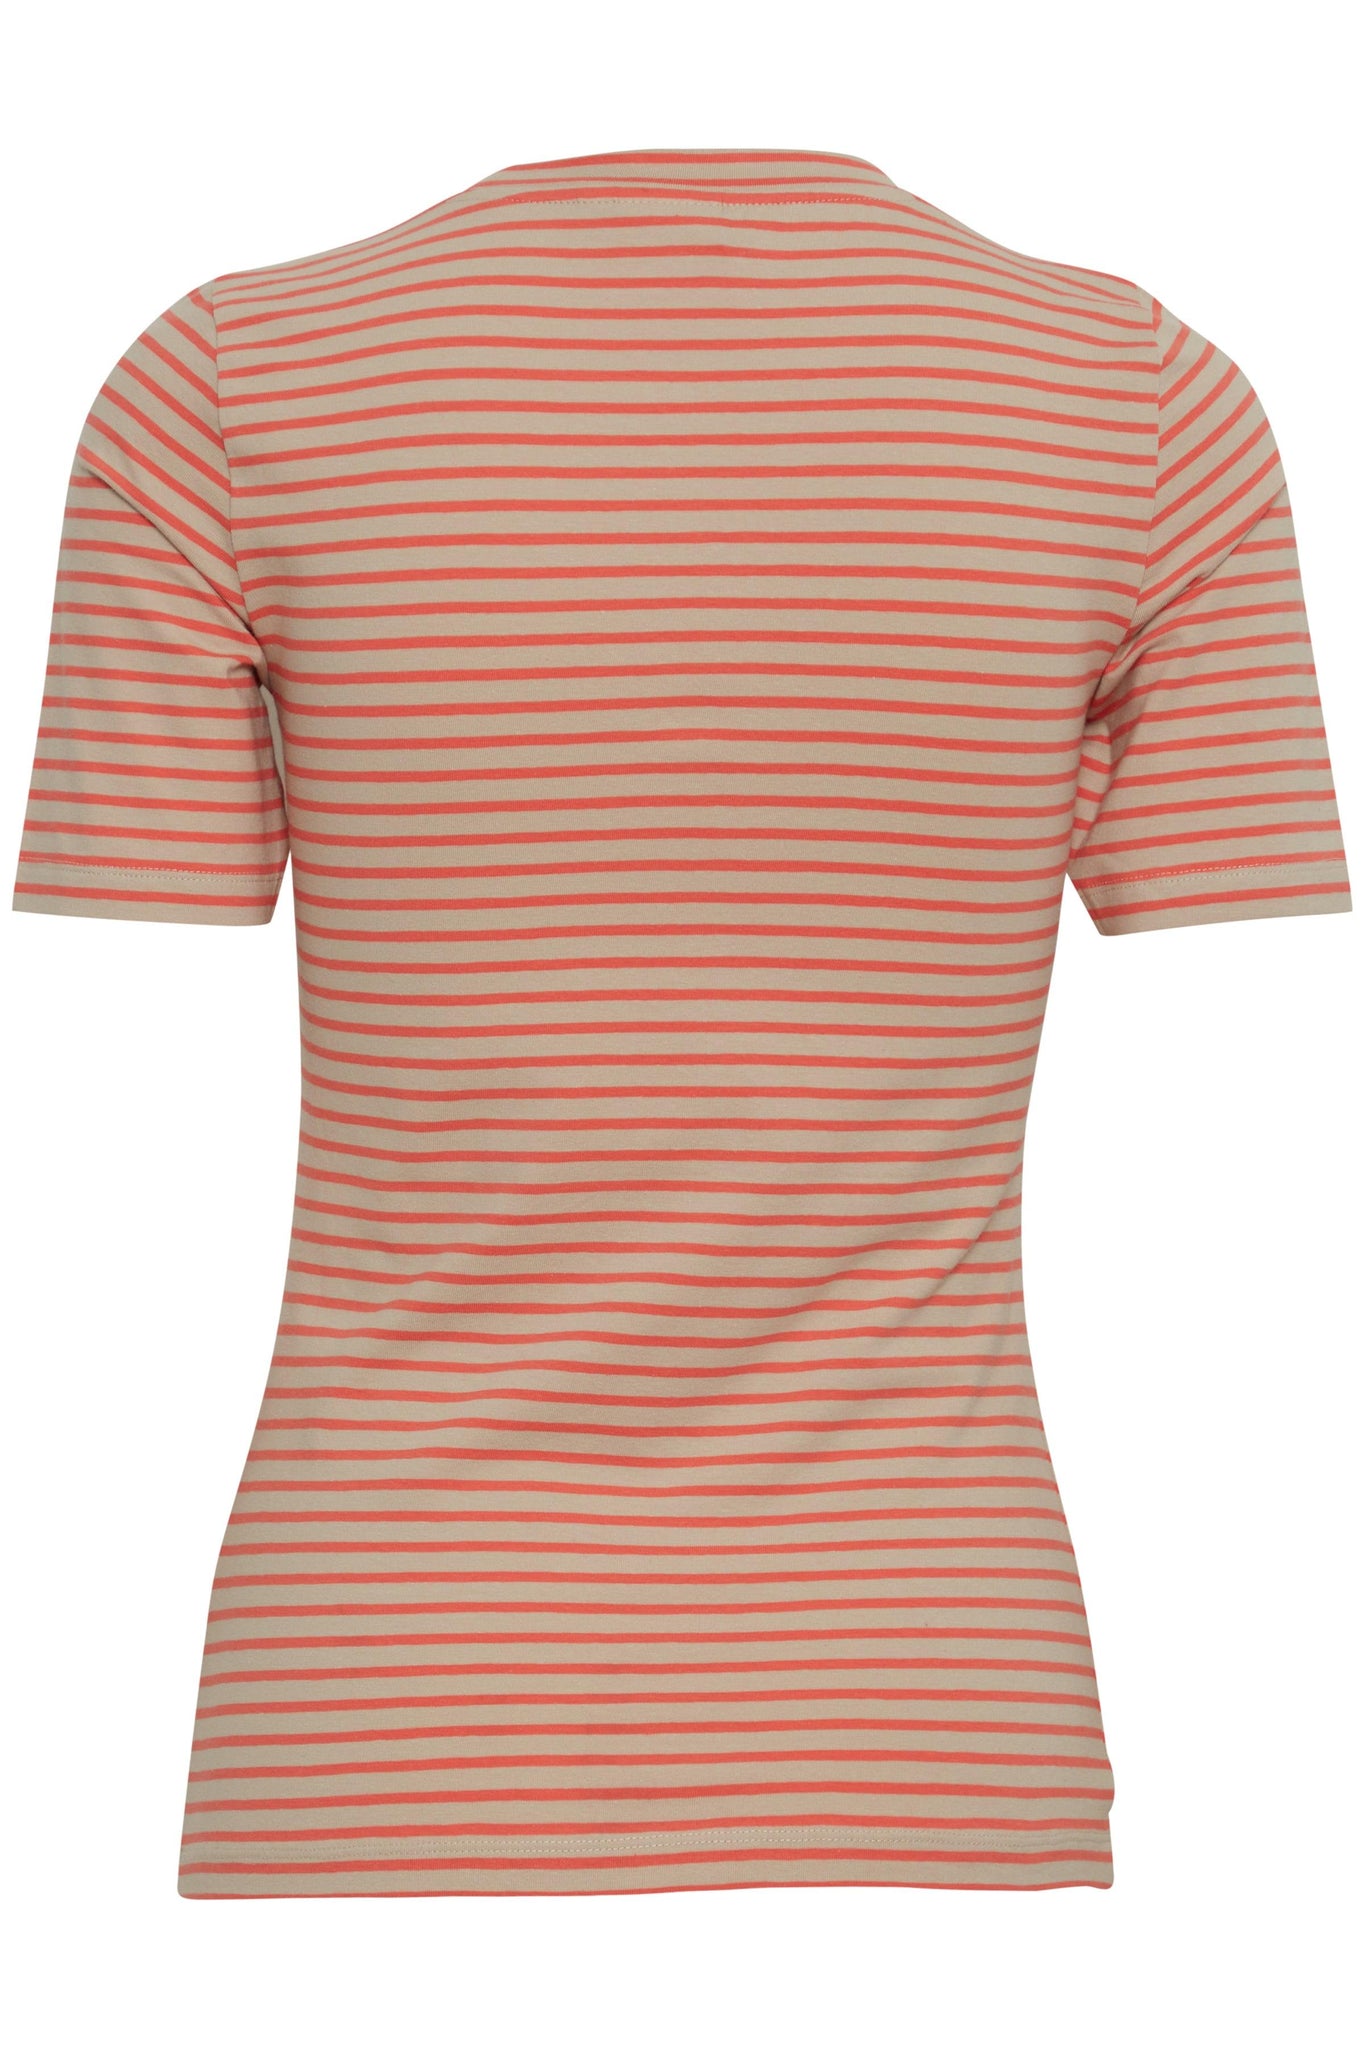 Camiseta ICHI Mira Hot Coral Stripes - ECRU